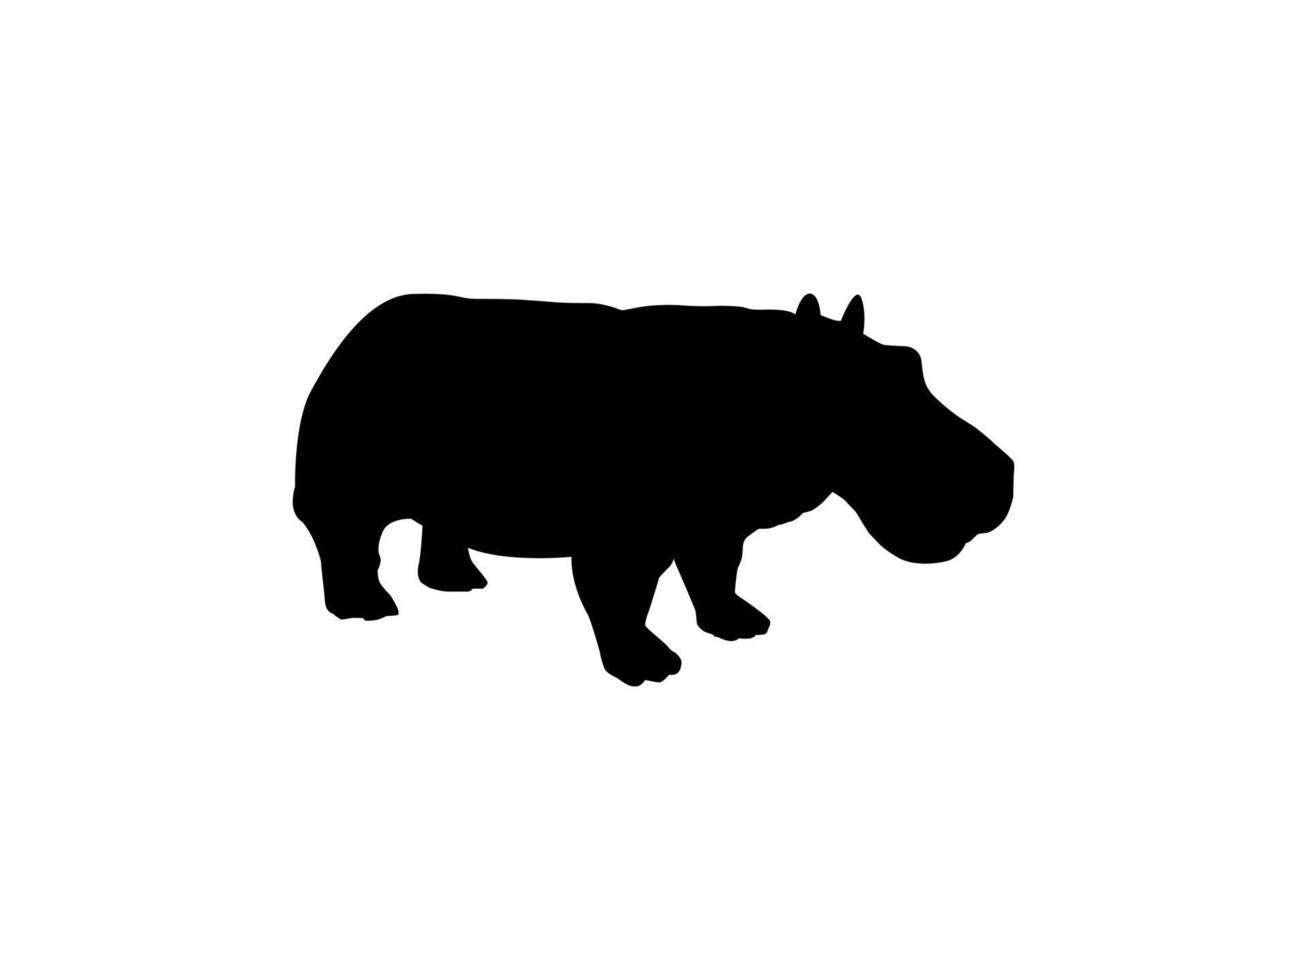 Hippopotamus Silhouette for Logo, Art Illustration, Icon, Symbol, Pictogram or Graphic Design Element. Vector Illustration